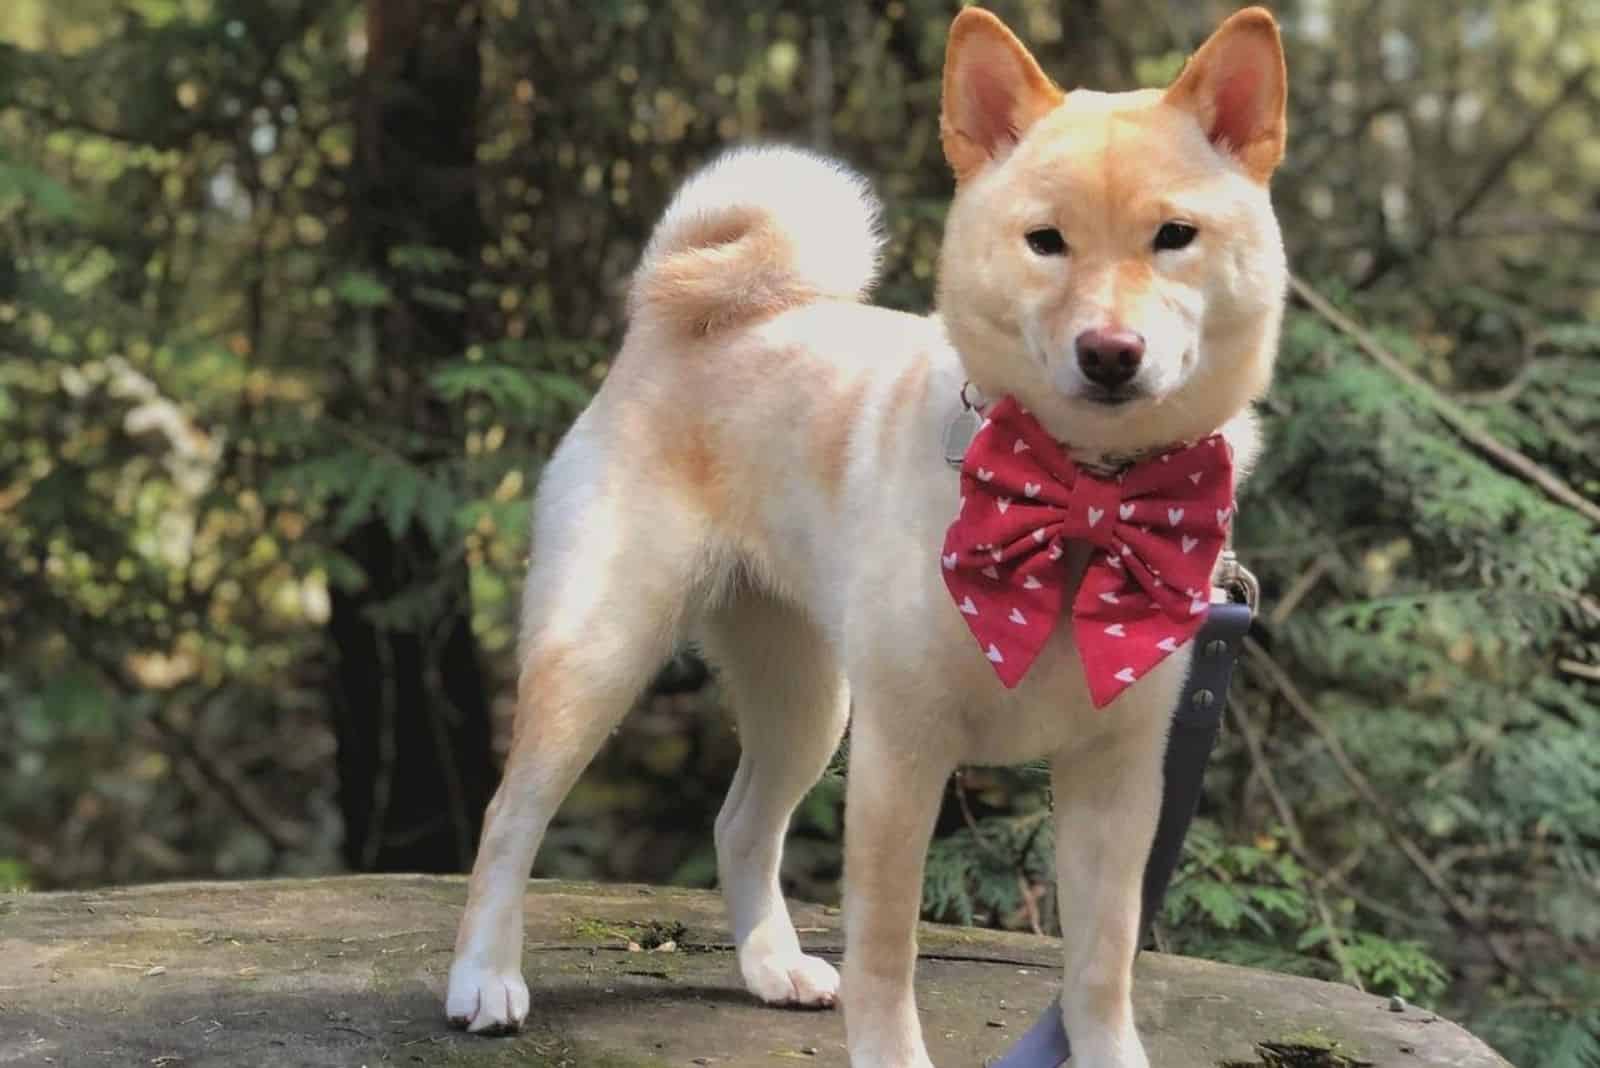 Cream Shiba Inu in park with cute tie